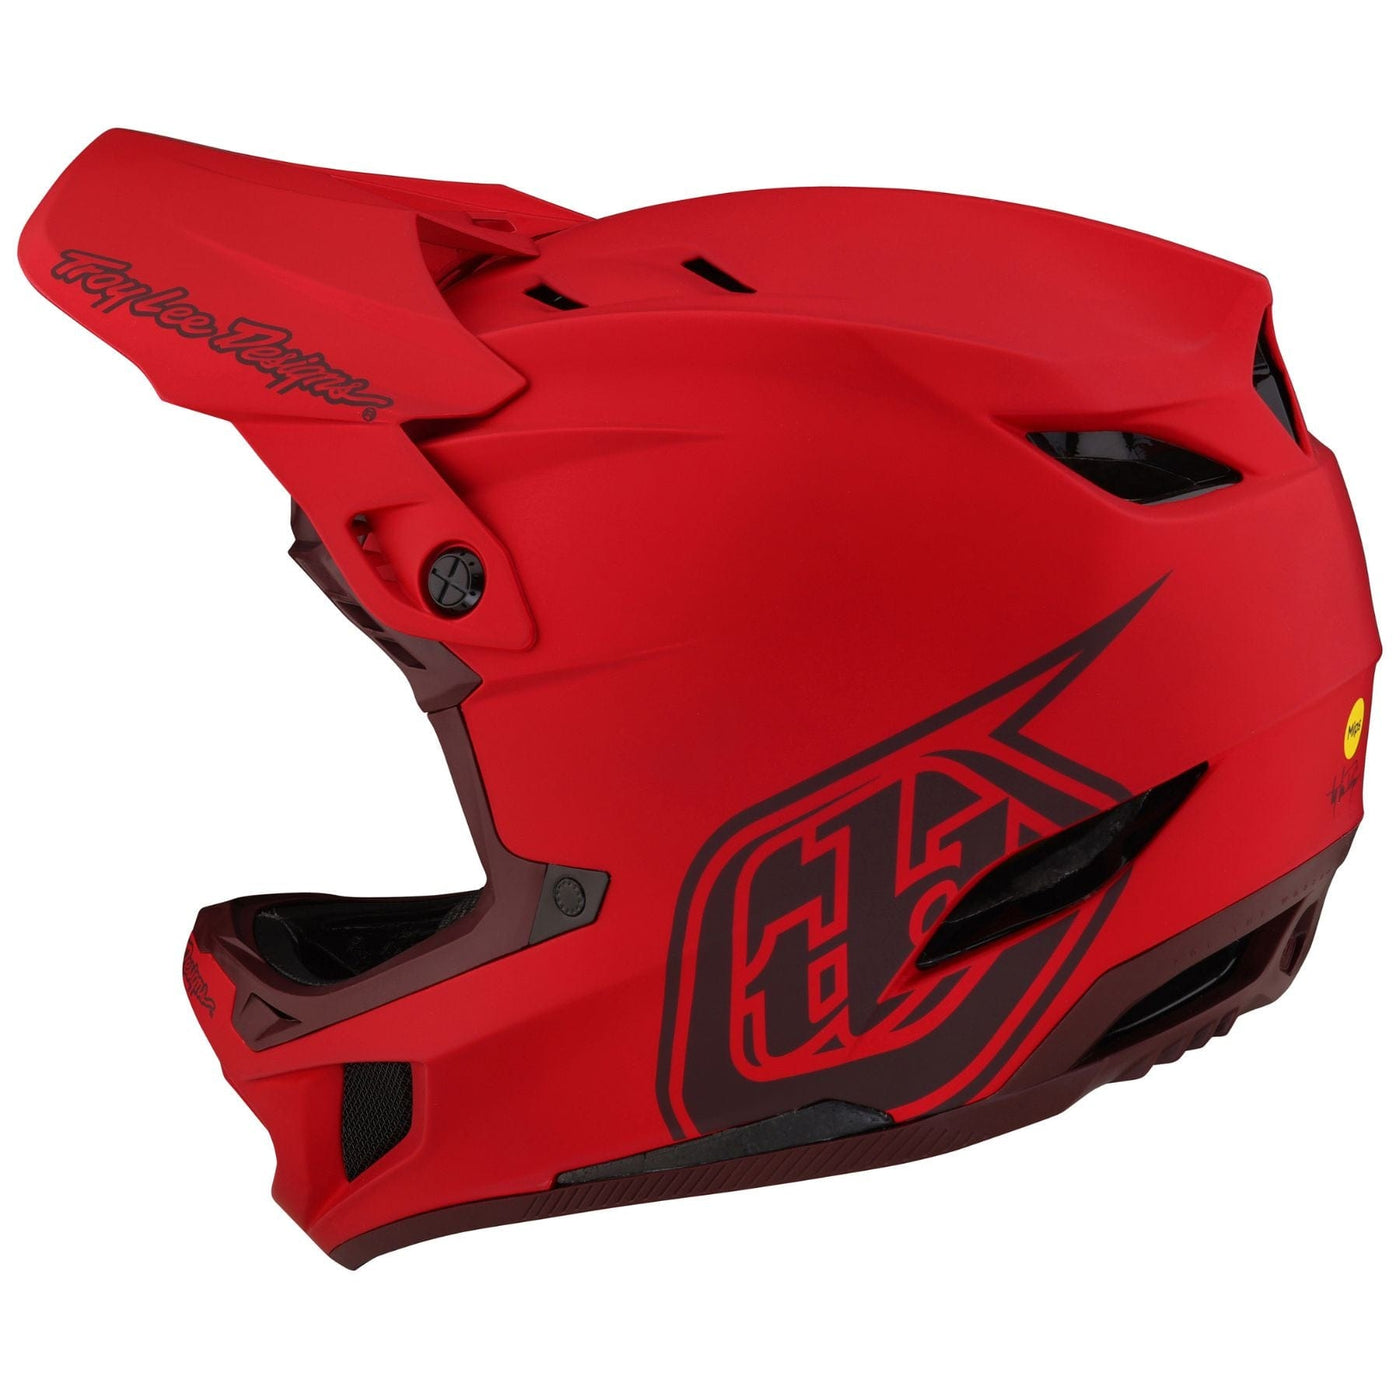 D4 enduro helmet - red